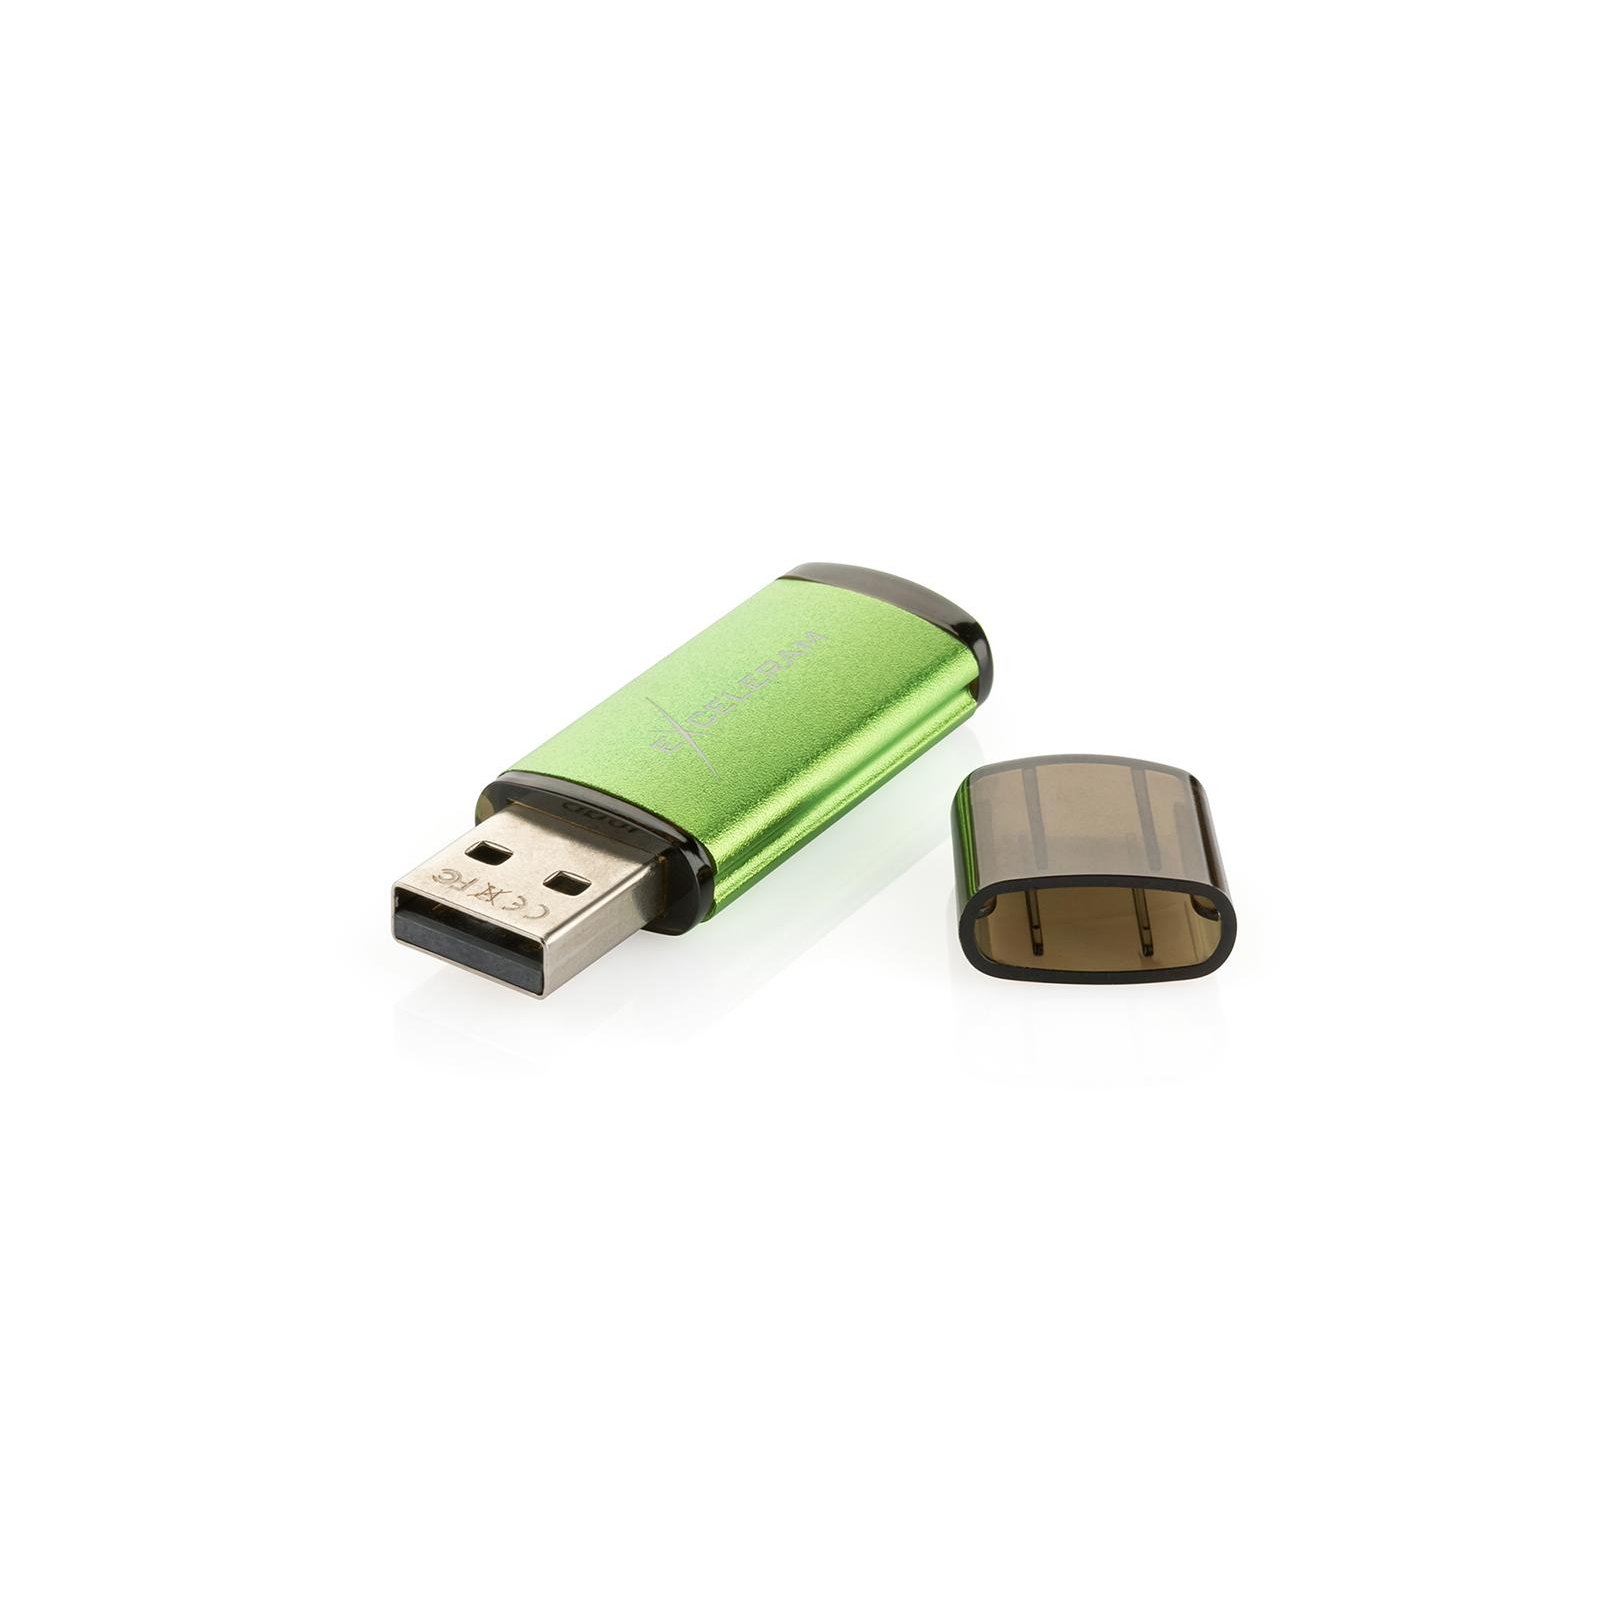 USB флеш накопитель eXceleram 64GB A3 Series Green USB 2.0 (EXA3U2GR64) изображение 5